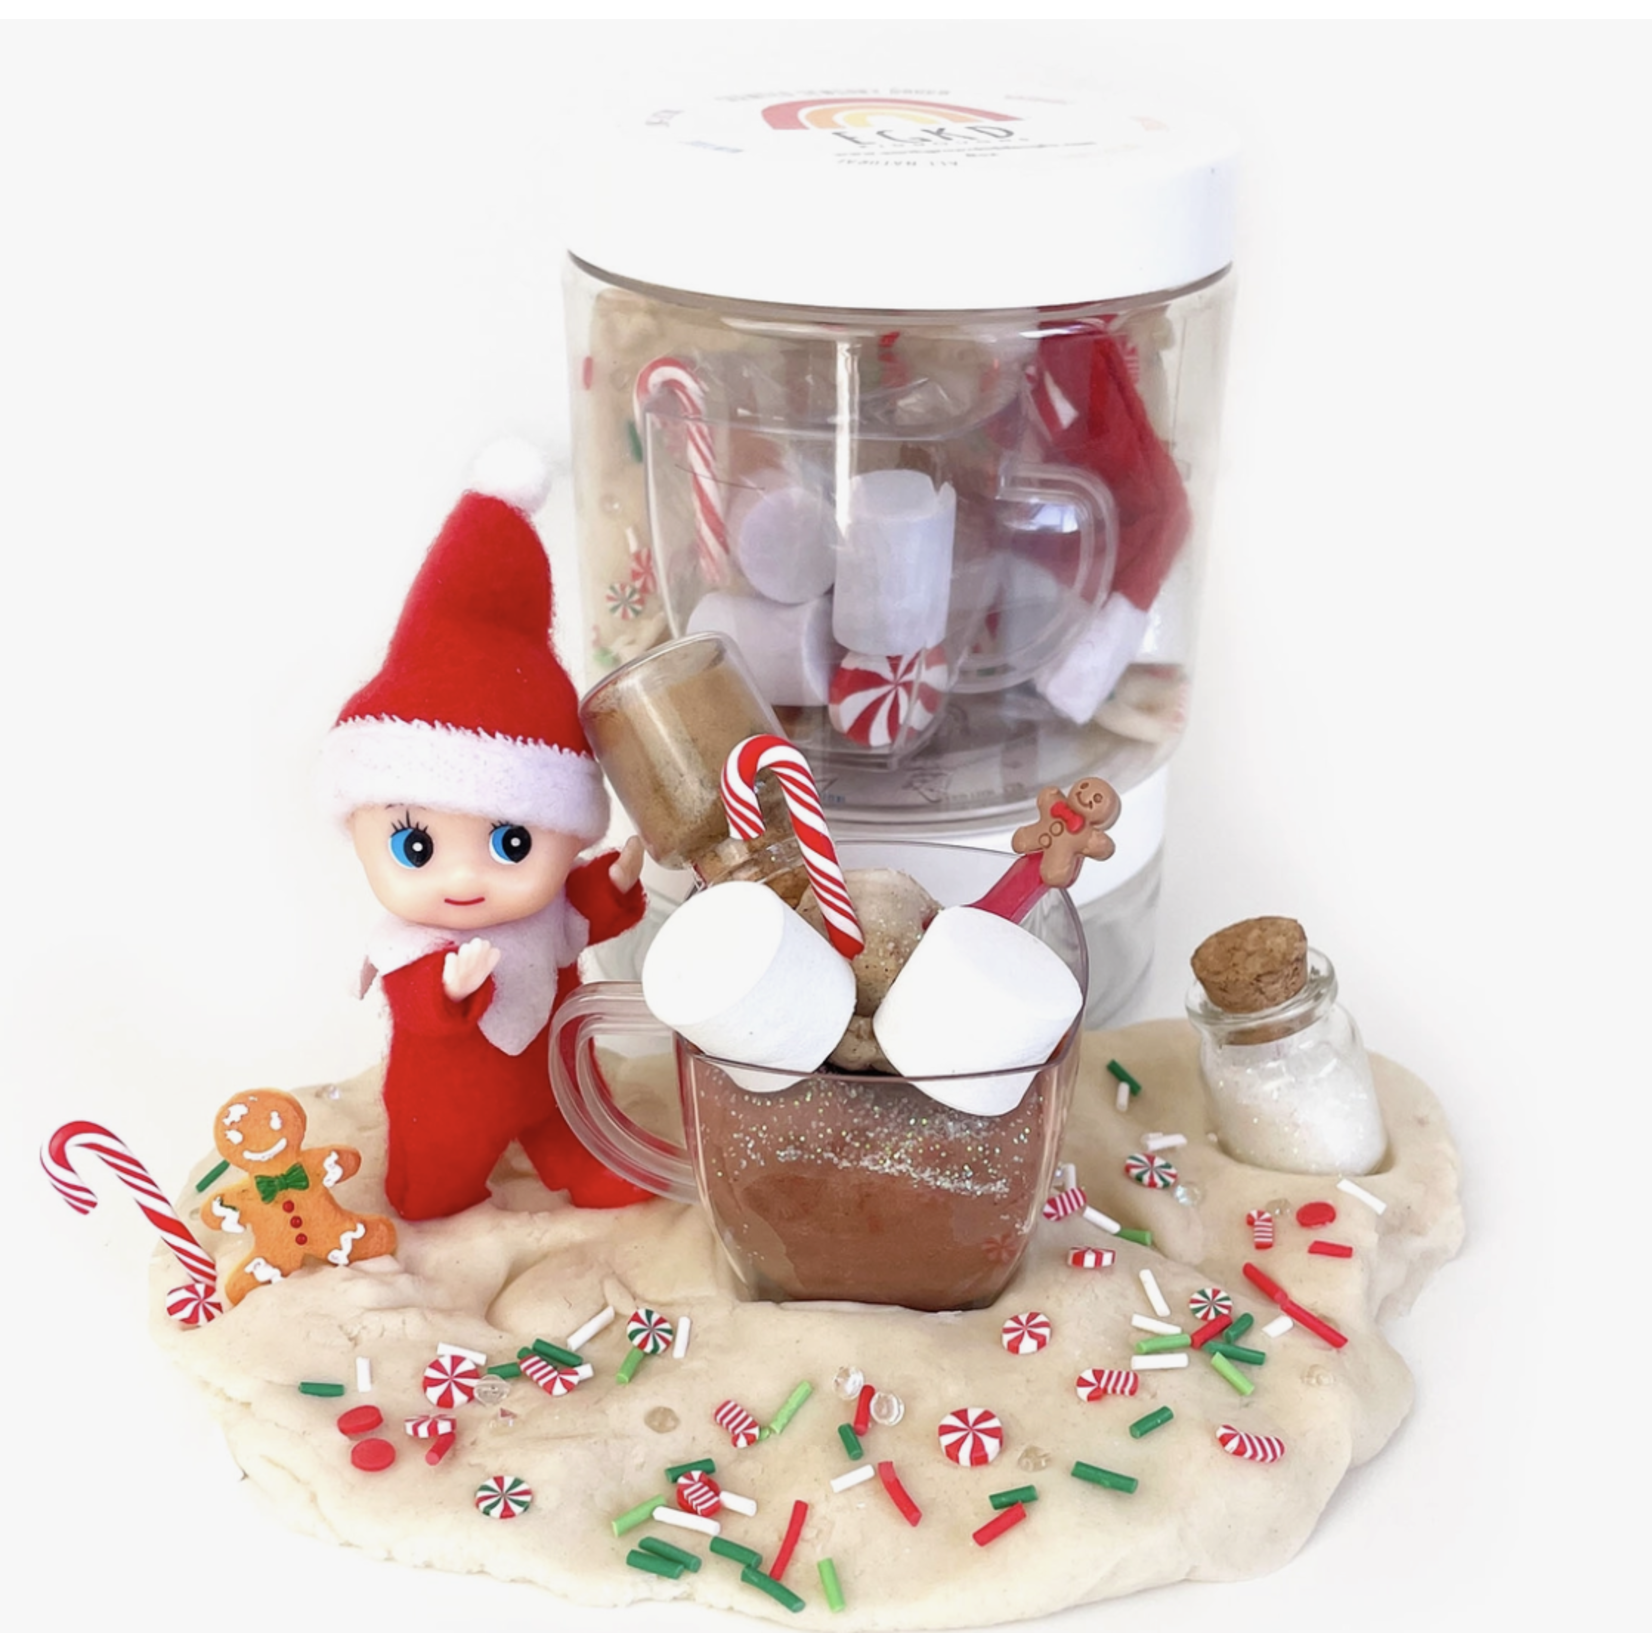 Earth Grown Kidsdough Elf in the Jar Sensory Play Dough Kit